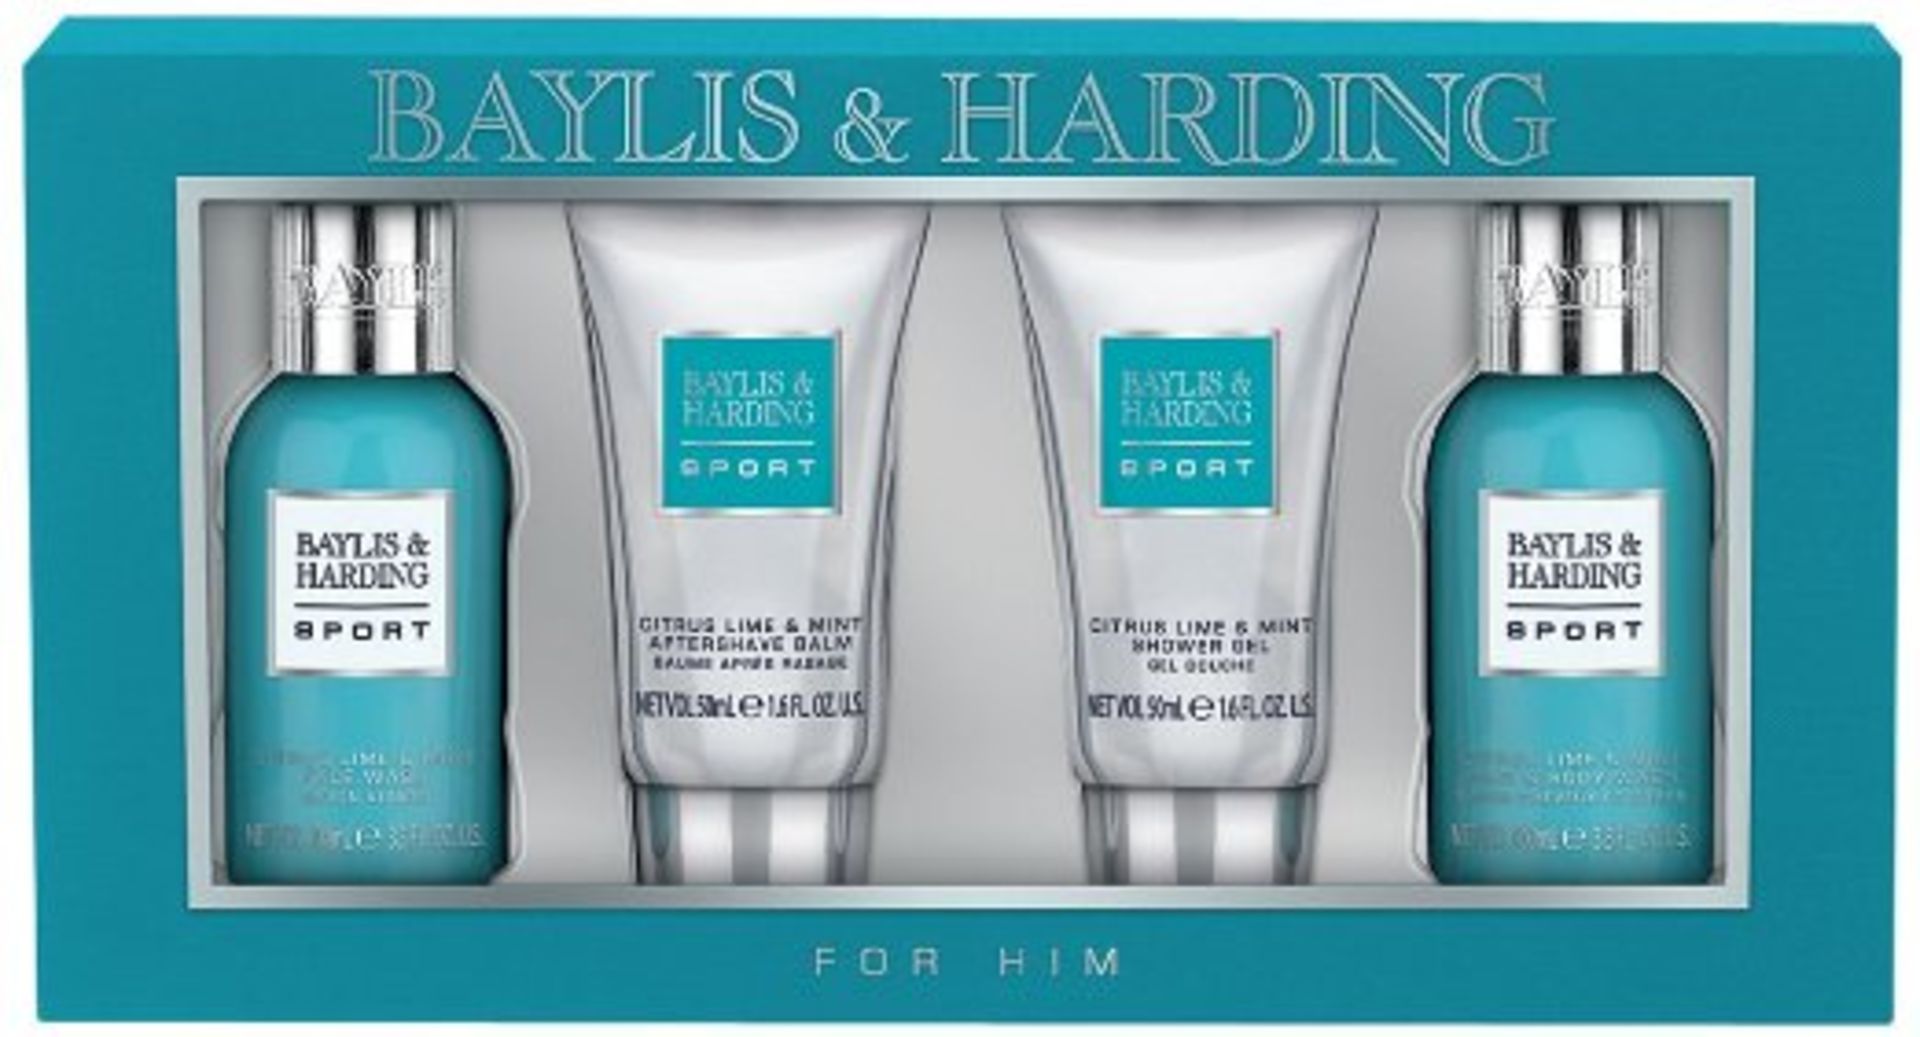 V Brand New Baylis & Harding Men's Citrus Lime & Mint Four Piece Gift Set RRP: £16 X 50 Bid price to